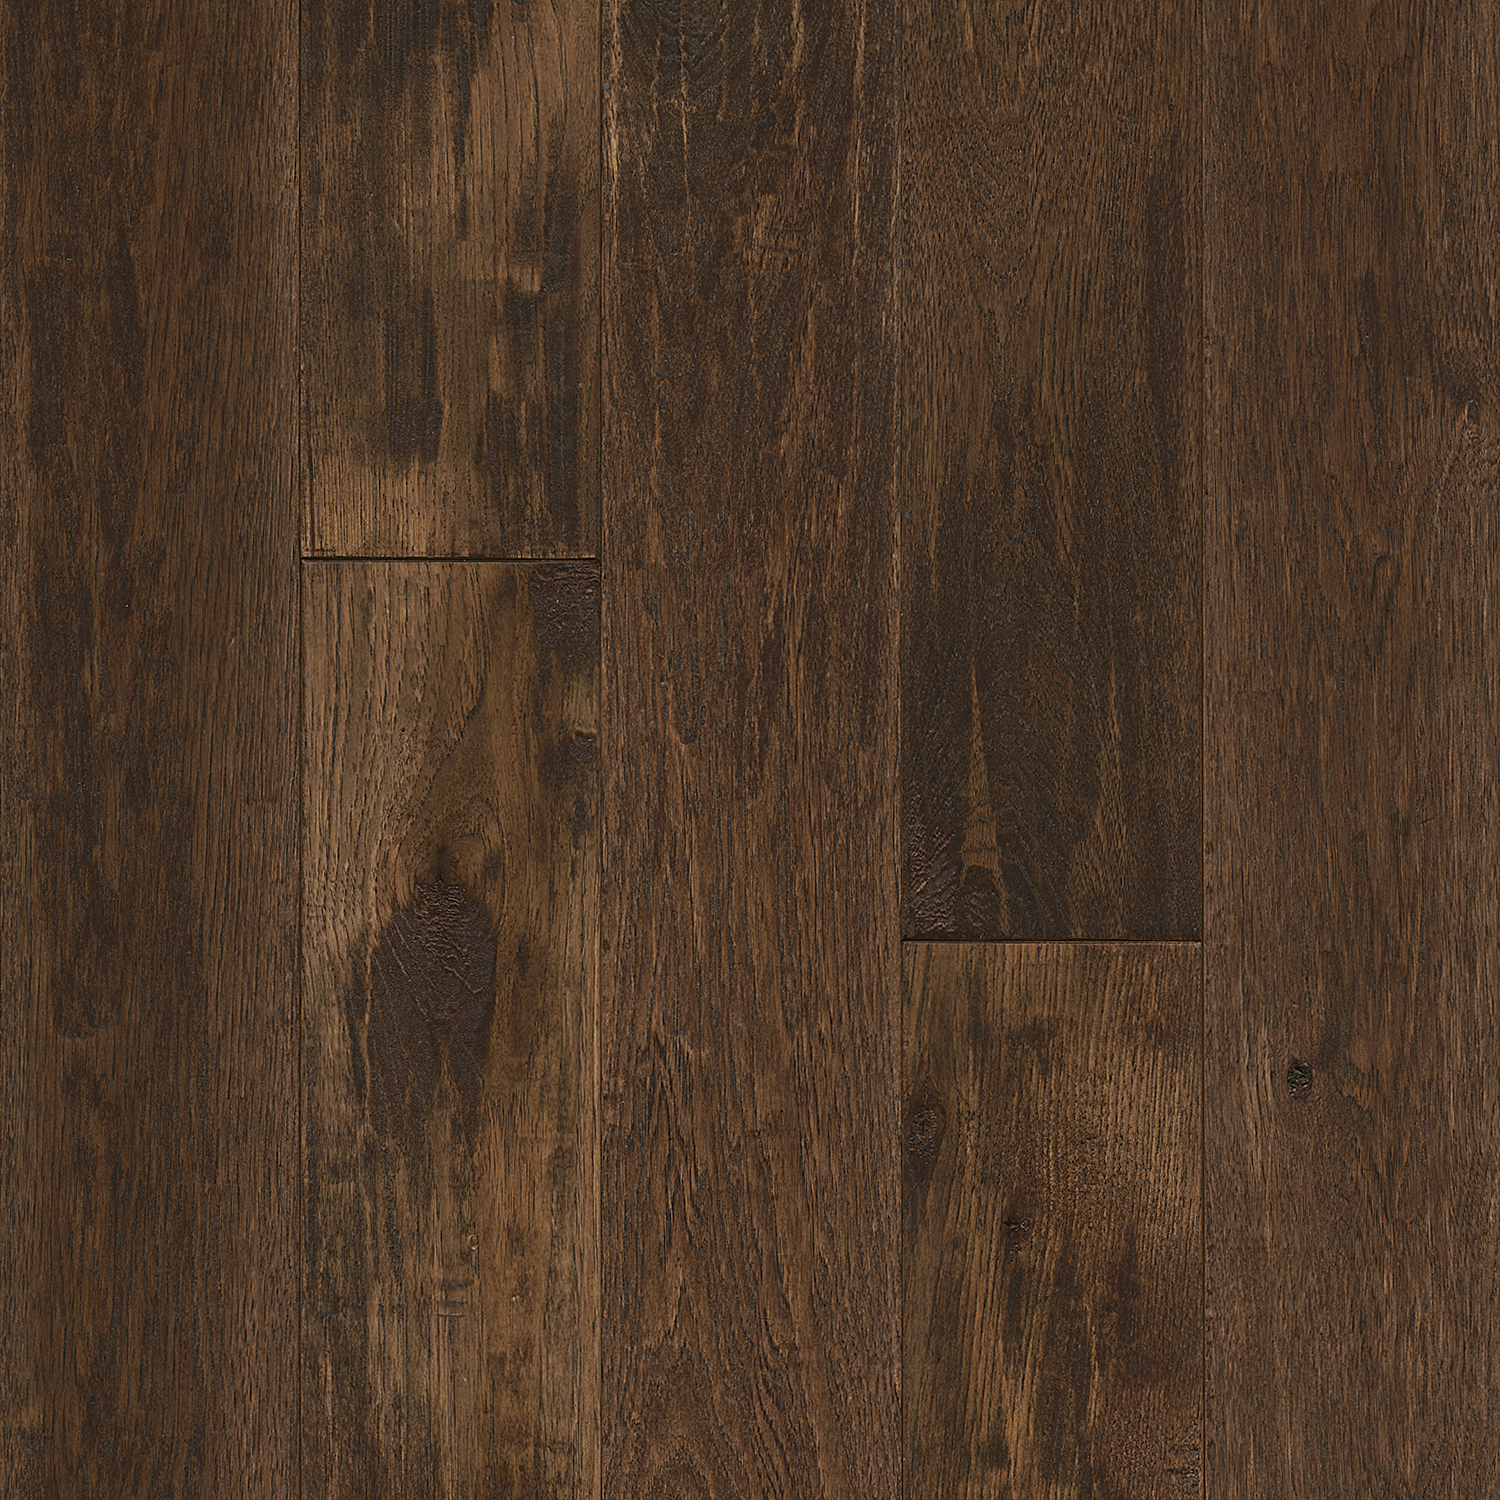 Hickory Solid Hardwood Sas508, R 038 S Hardwood Flooring